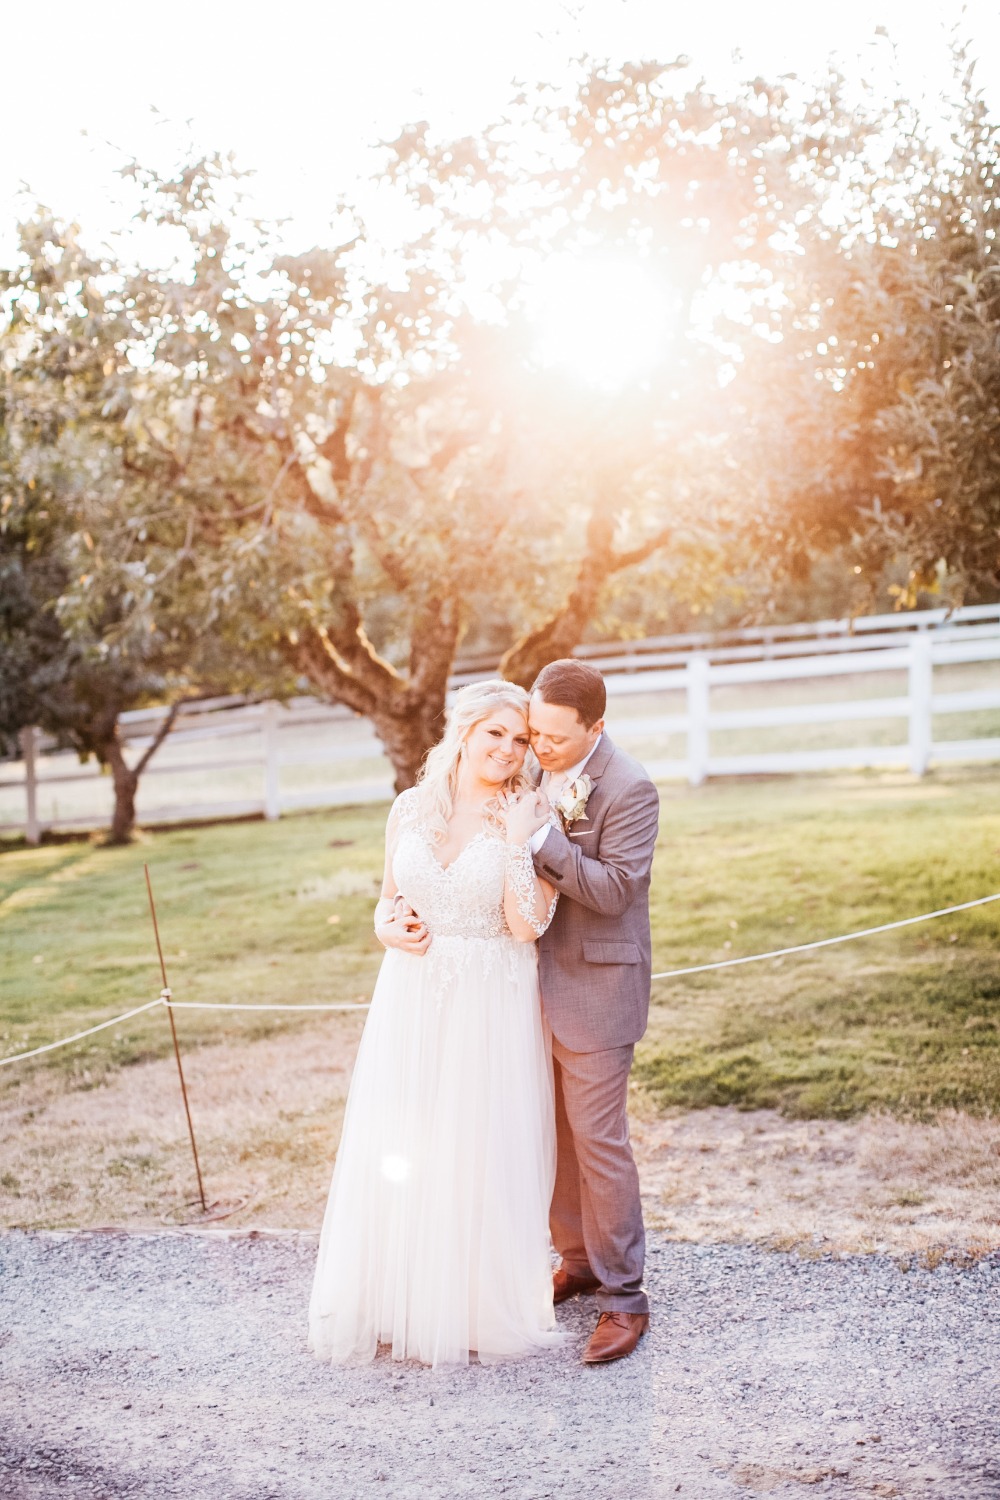 Beautiful sunset wedding portrait